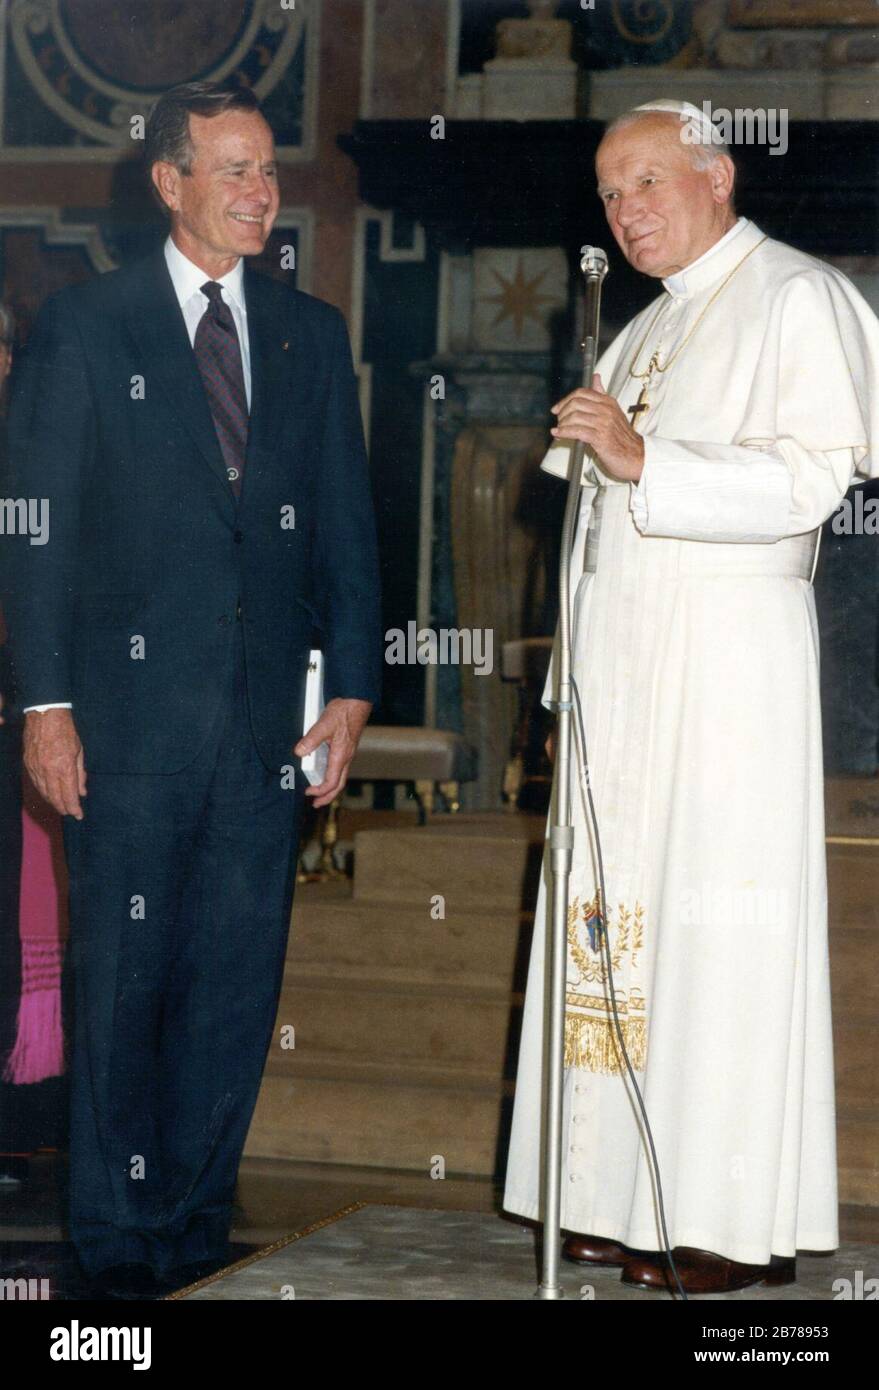 George H W Bush and Pope John Paul II. Stock Photo